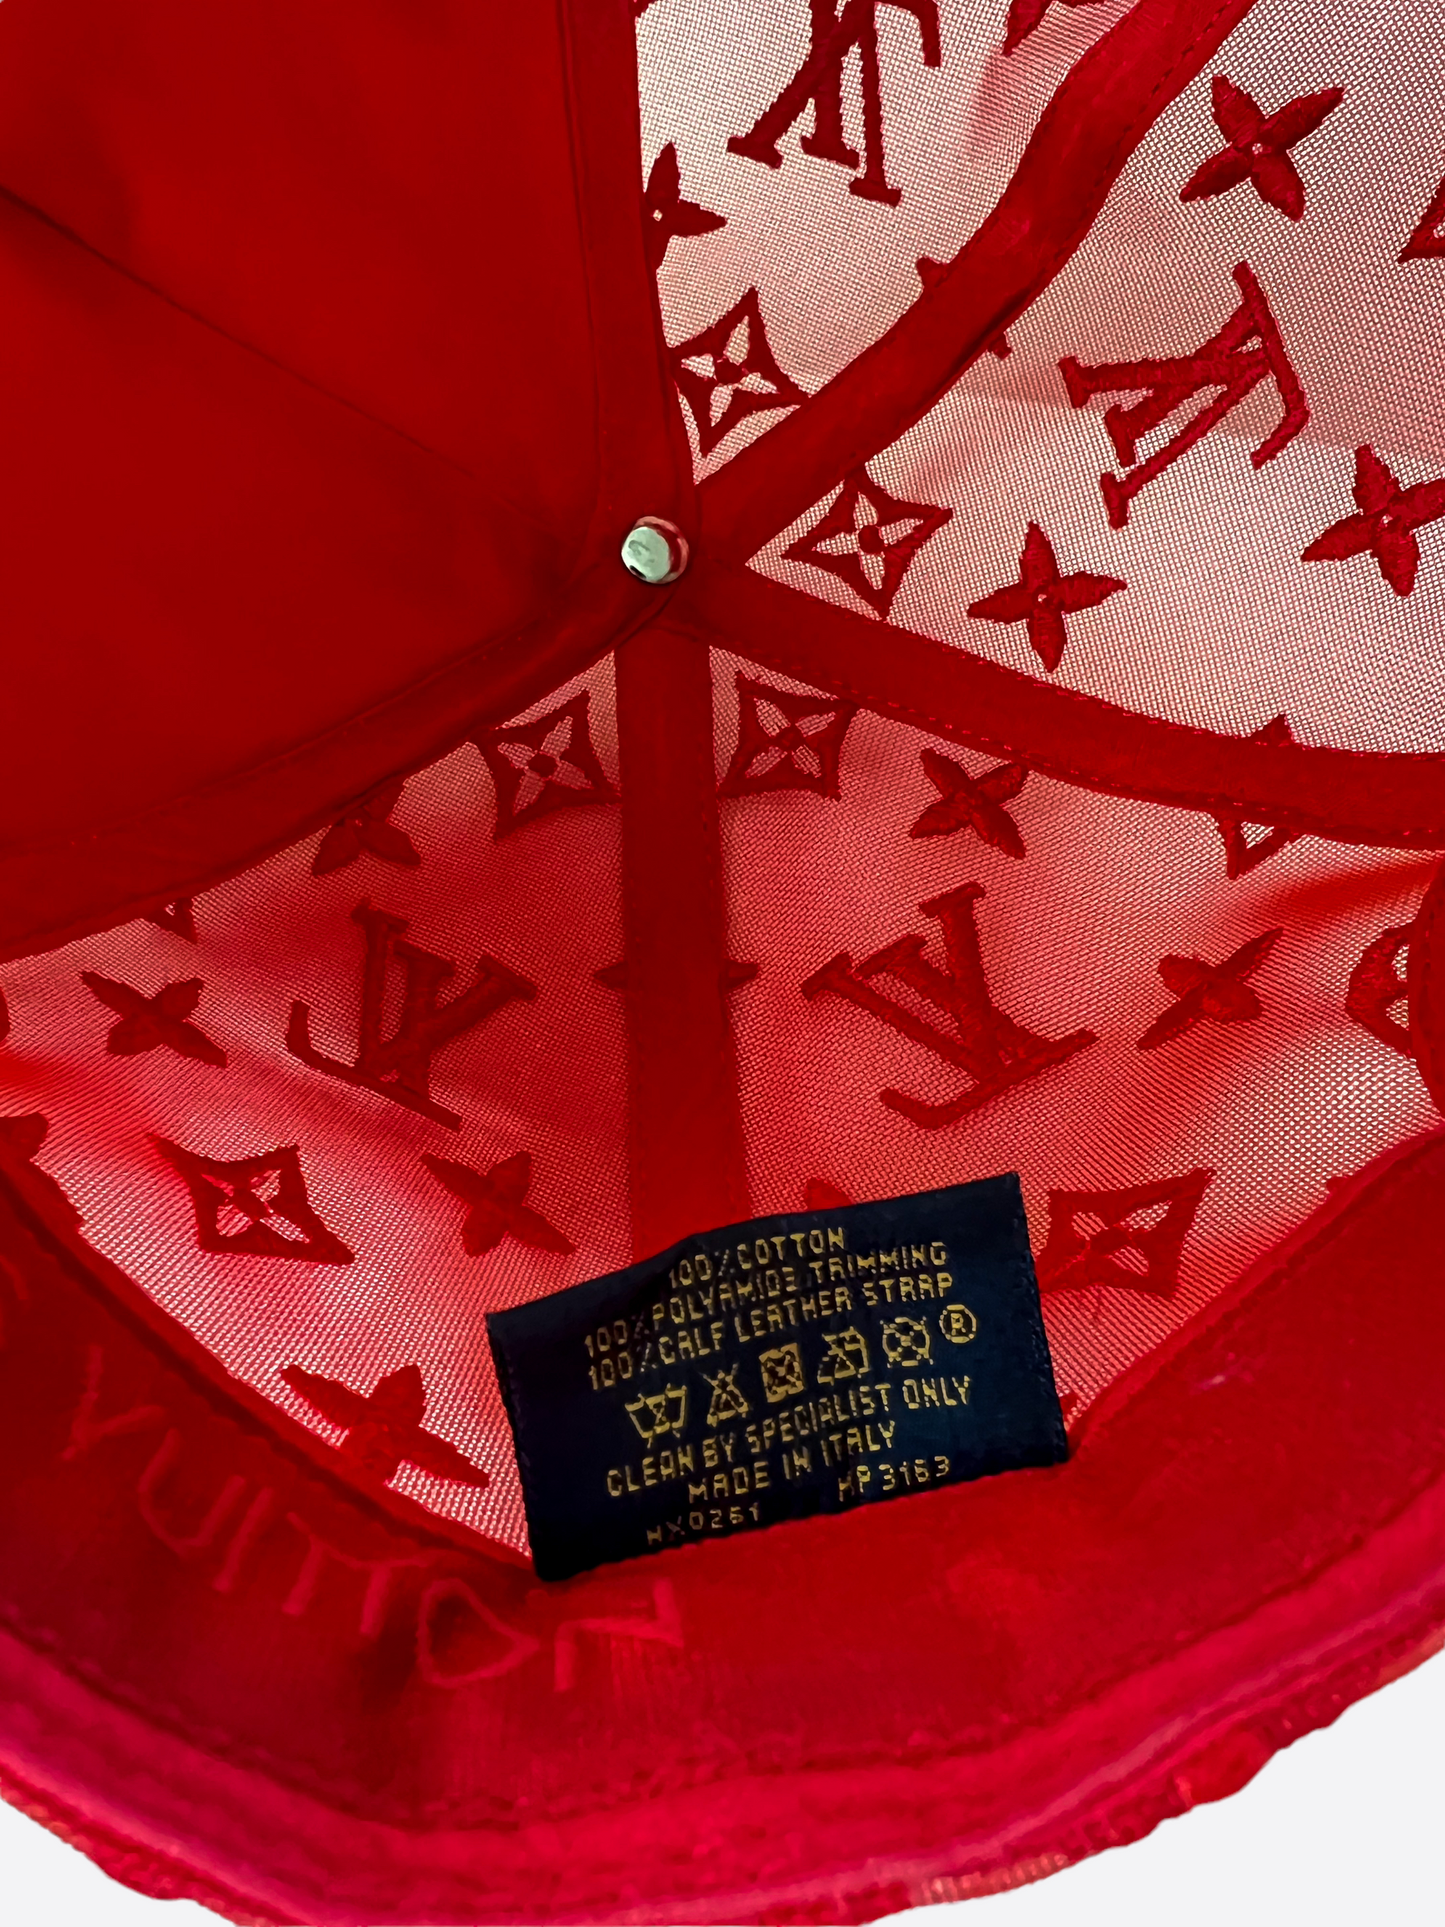 Louis Vuitton Soho Pop Up Exclusive Matte Red Monogram Chain